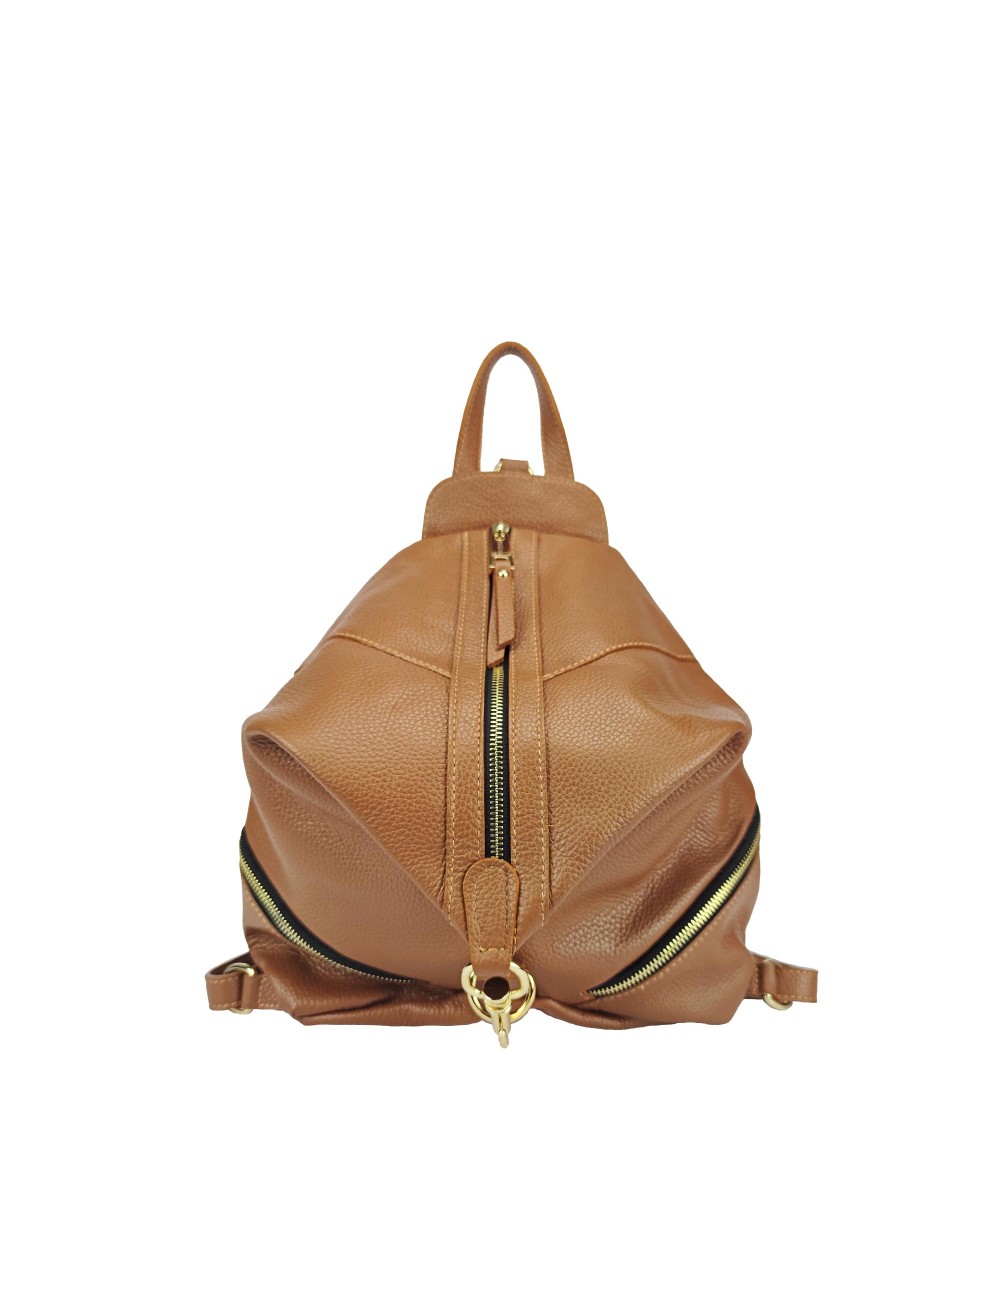 Shoulder Backpack in Natural Tanned Leather